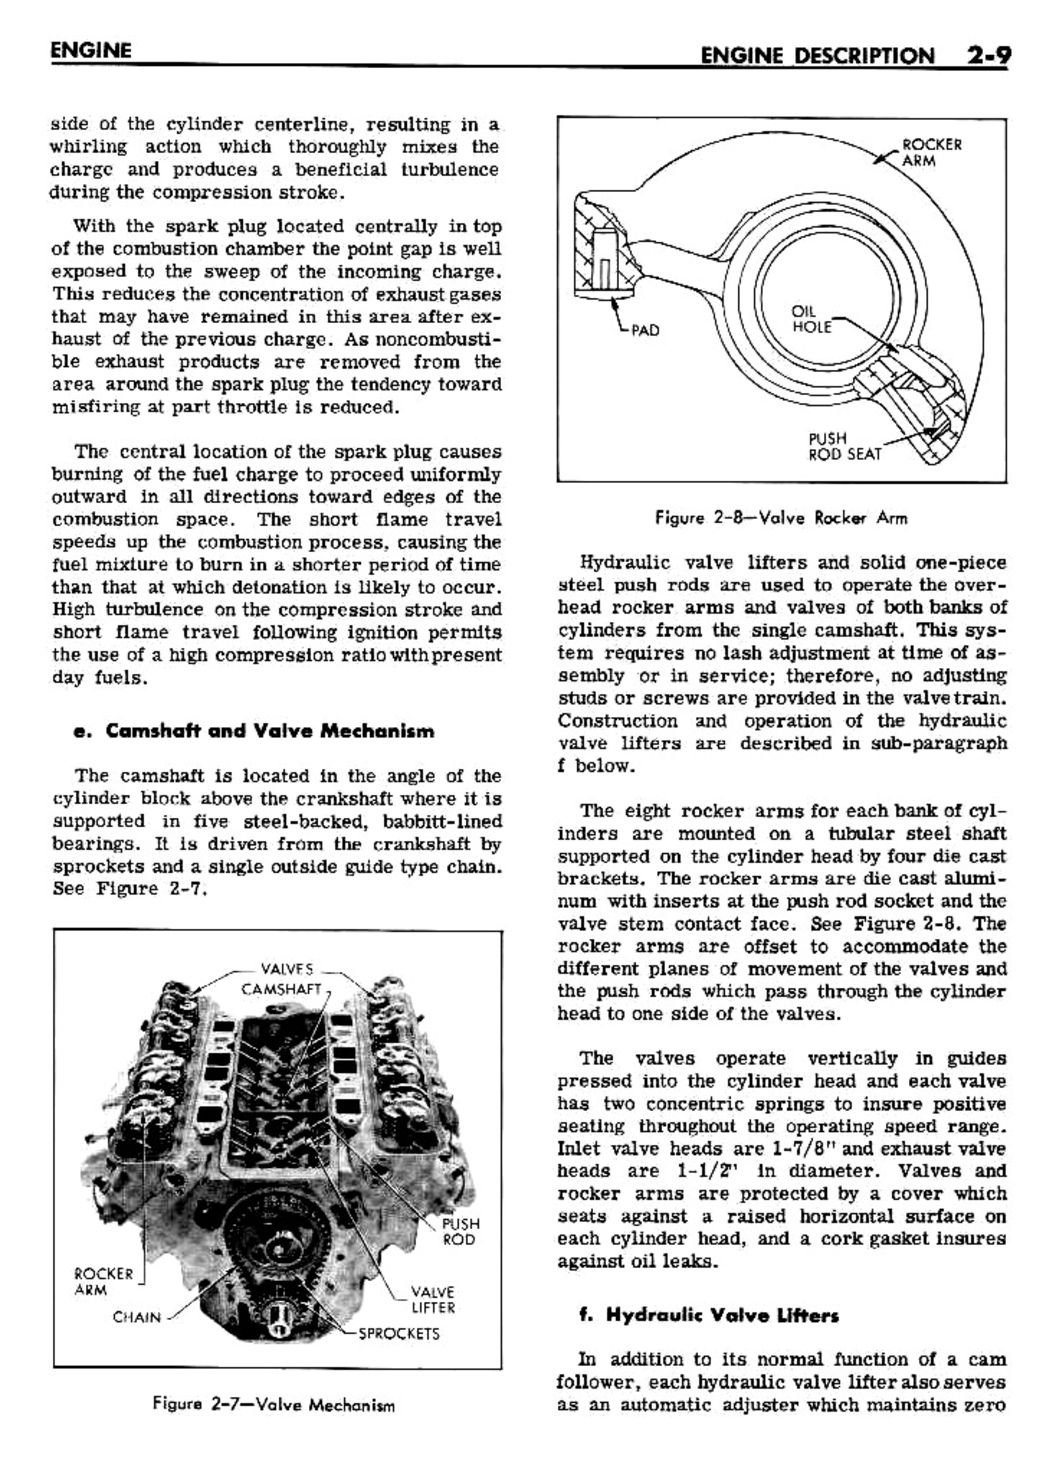 n_03 1961 Buick Shop Manual - Engine-009-009.jpg